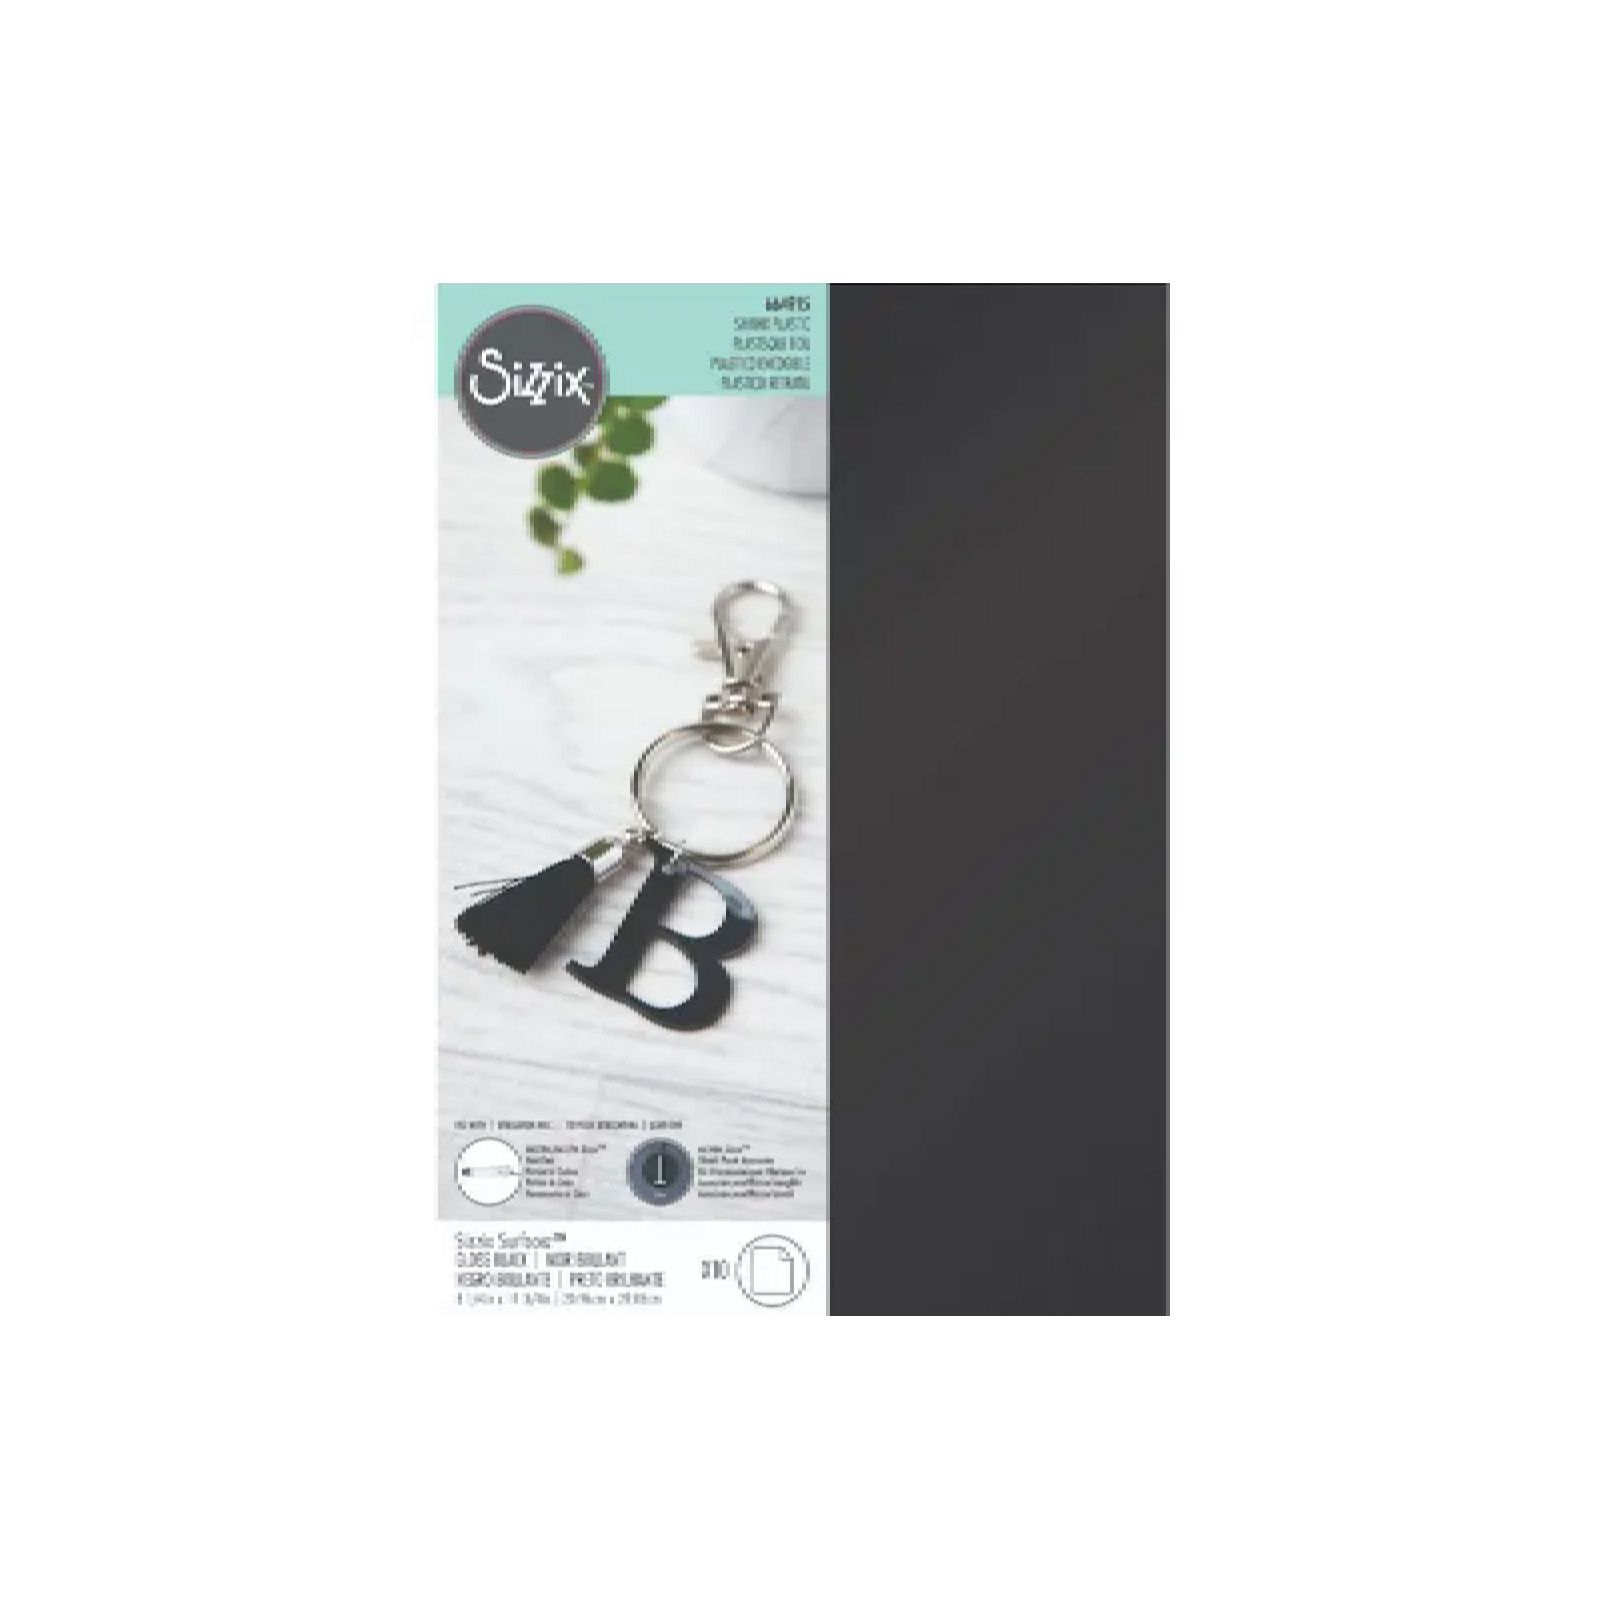 Sizzix • Surfacez Shrink Plastic 10PK (A4 schwarz glänzend)